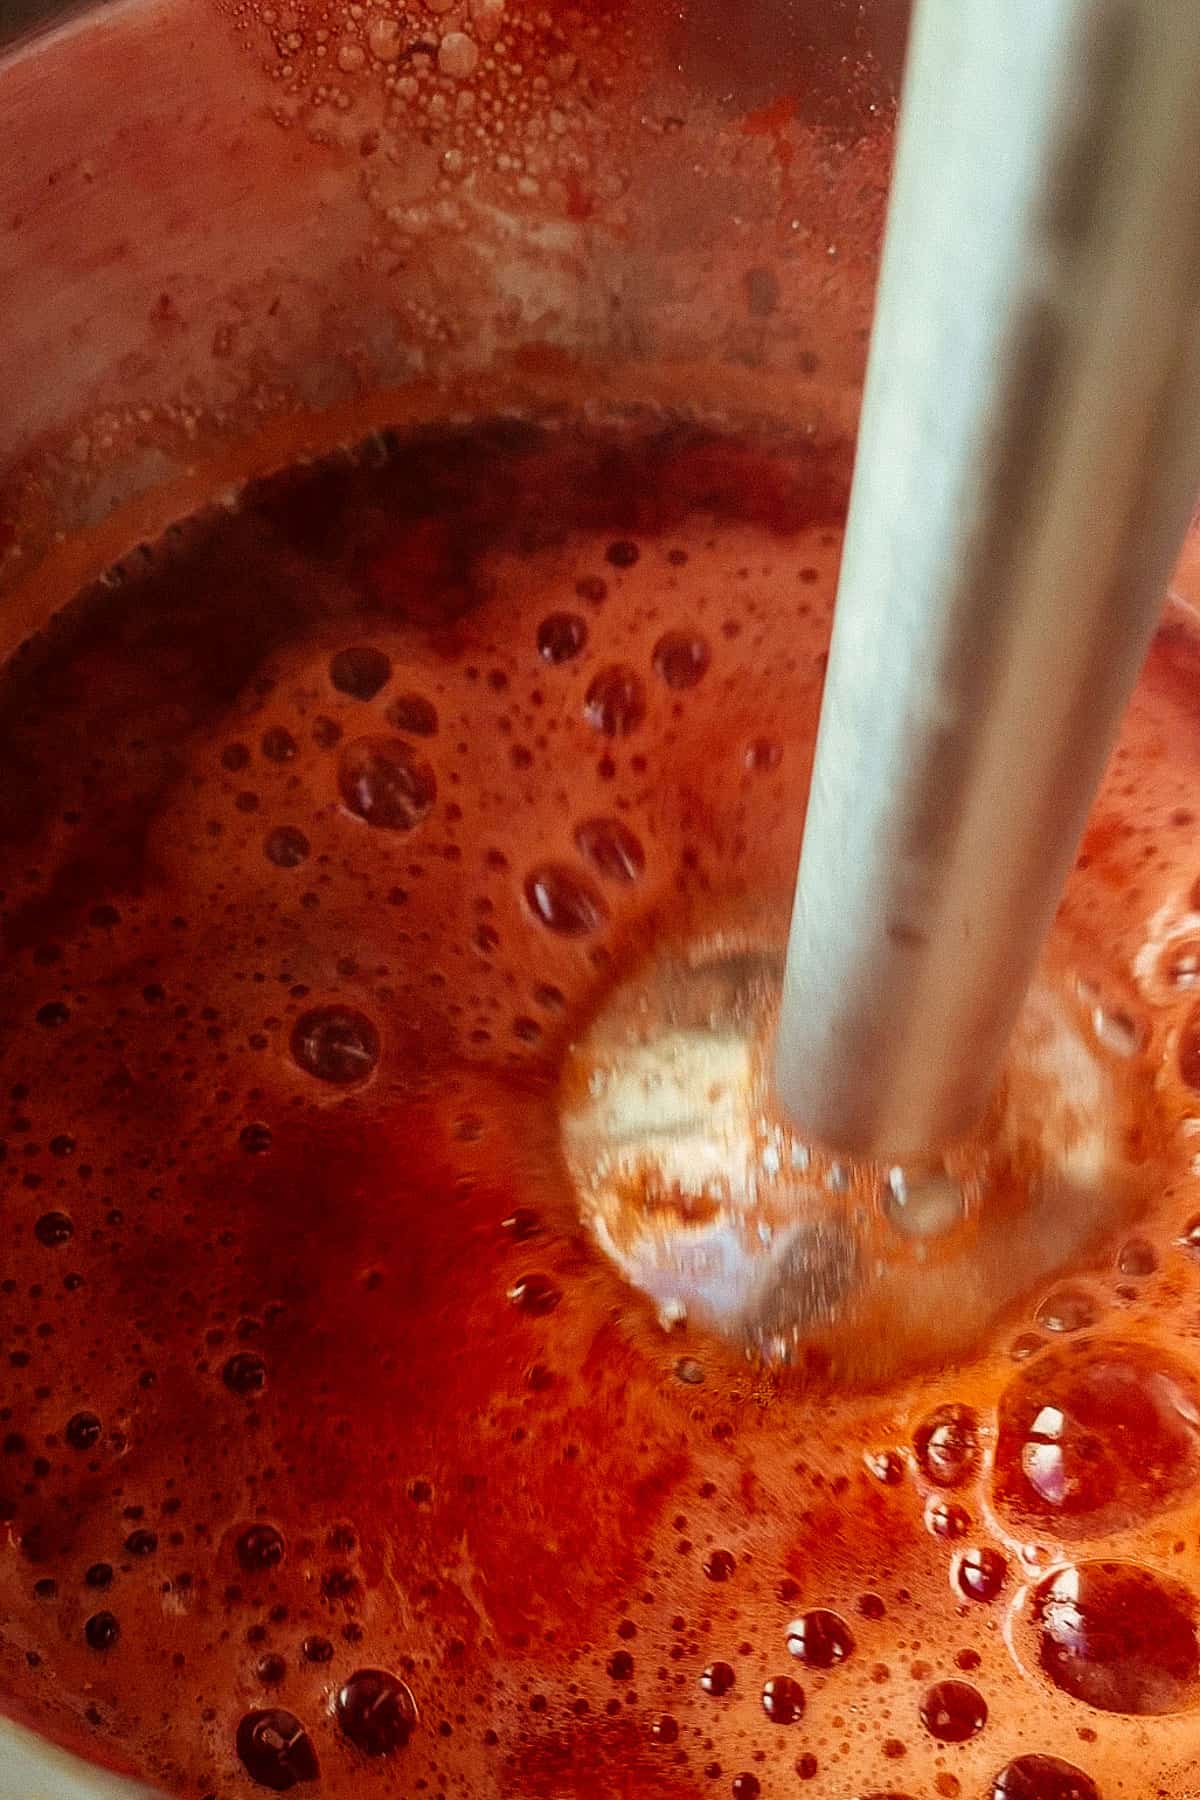 blending strawberries with an immersion blender